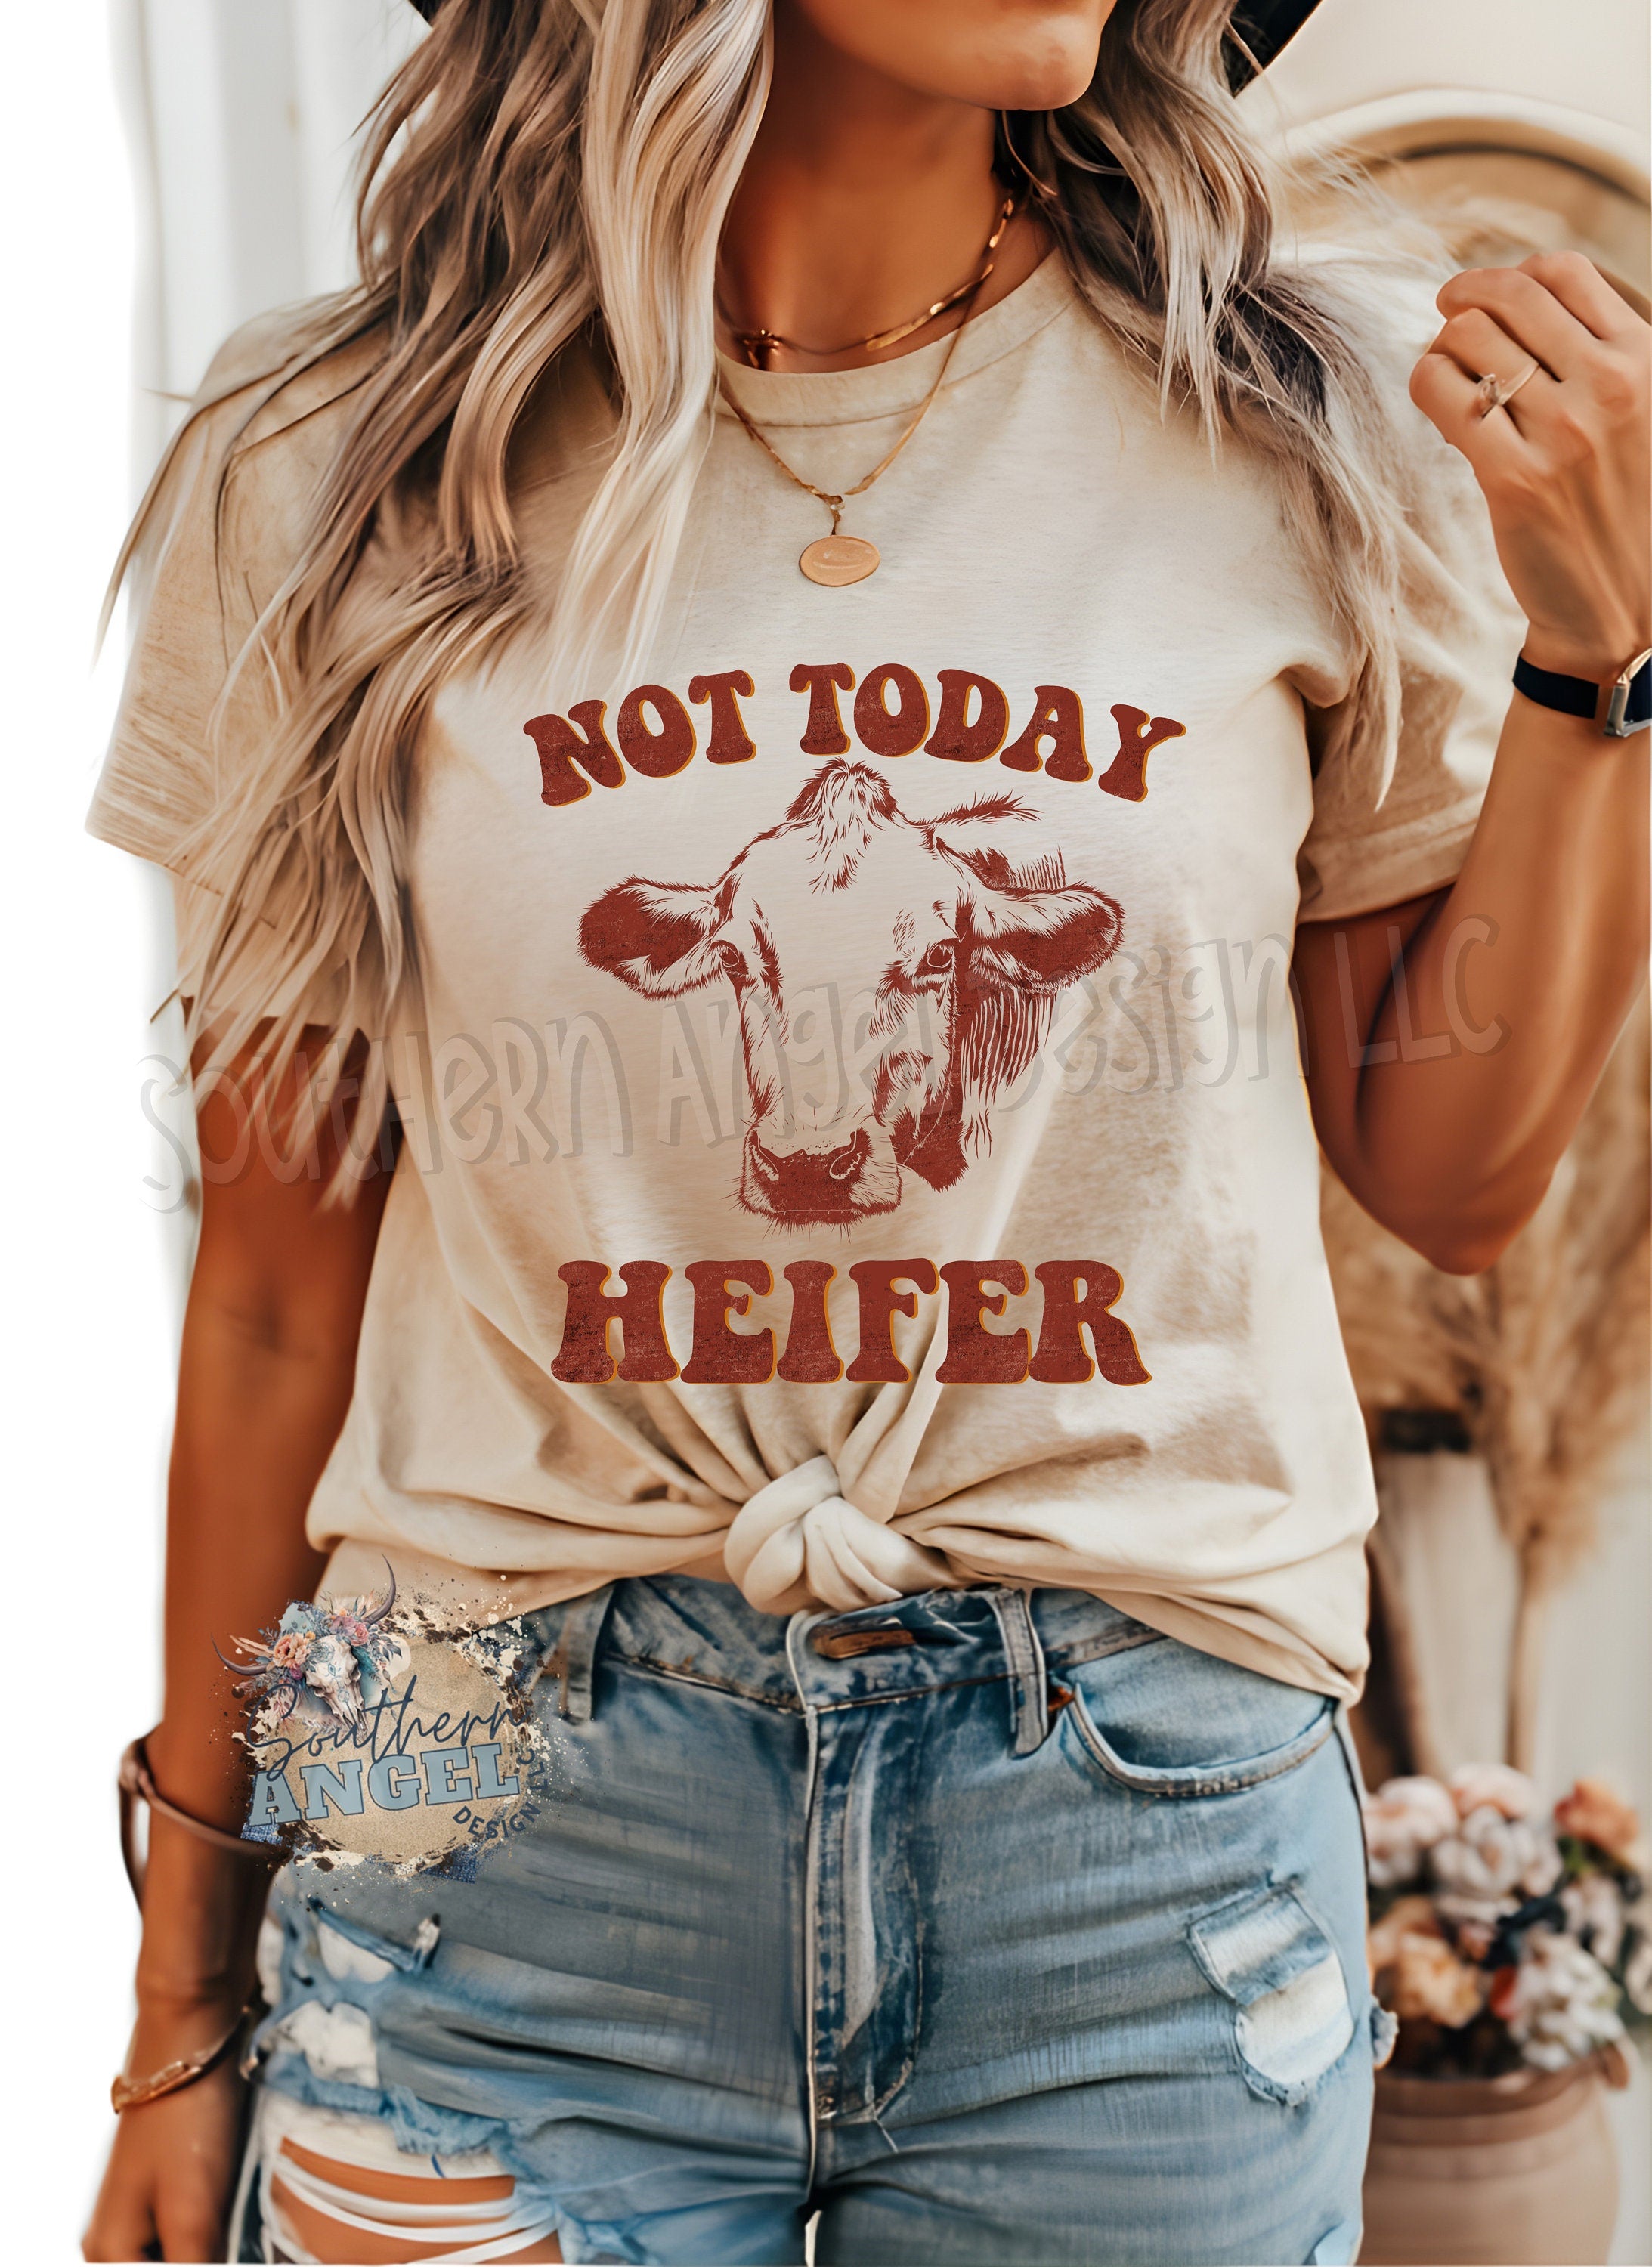 Not today heifer shirt, Texas forever shirt, womens Texas shirt, Texas pride shirt, State shirt, Texas shirt, Texas love, Texas strong shirt